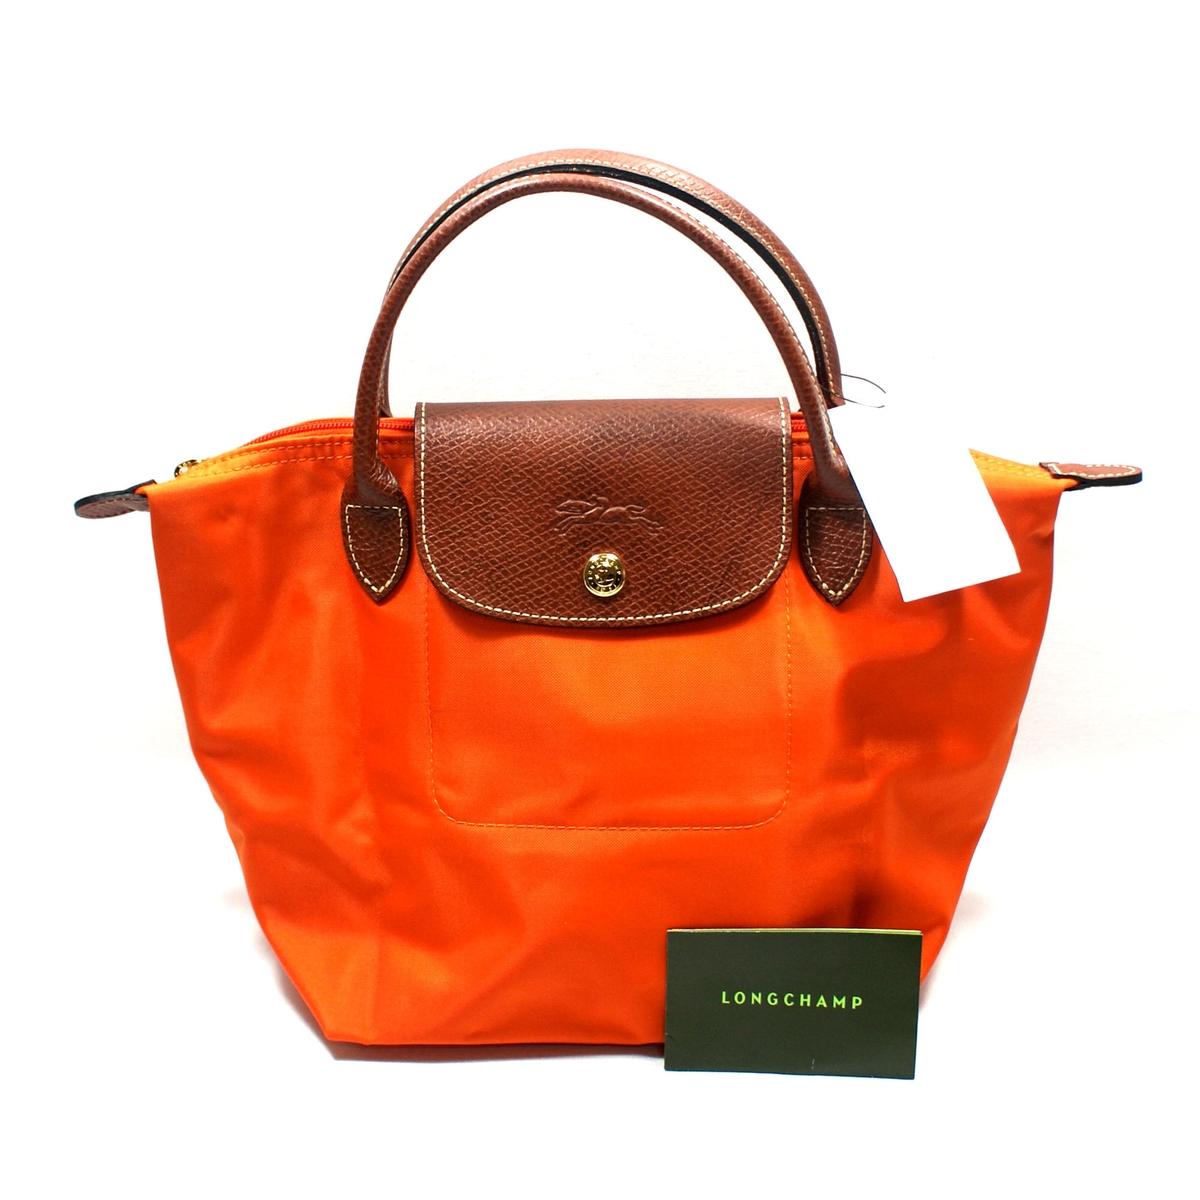 Longchamp Le Place Mini Duffle Tote Bag Orange #1621089217 | Longchamp 1621089217